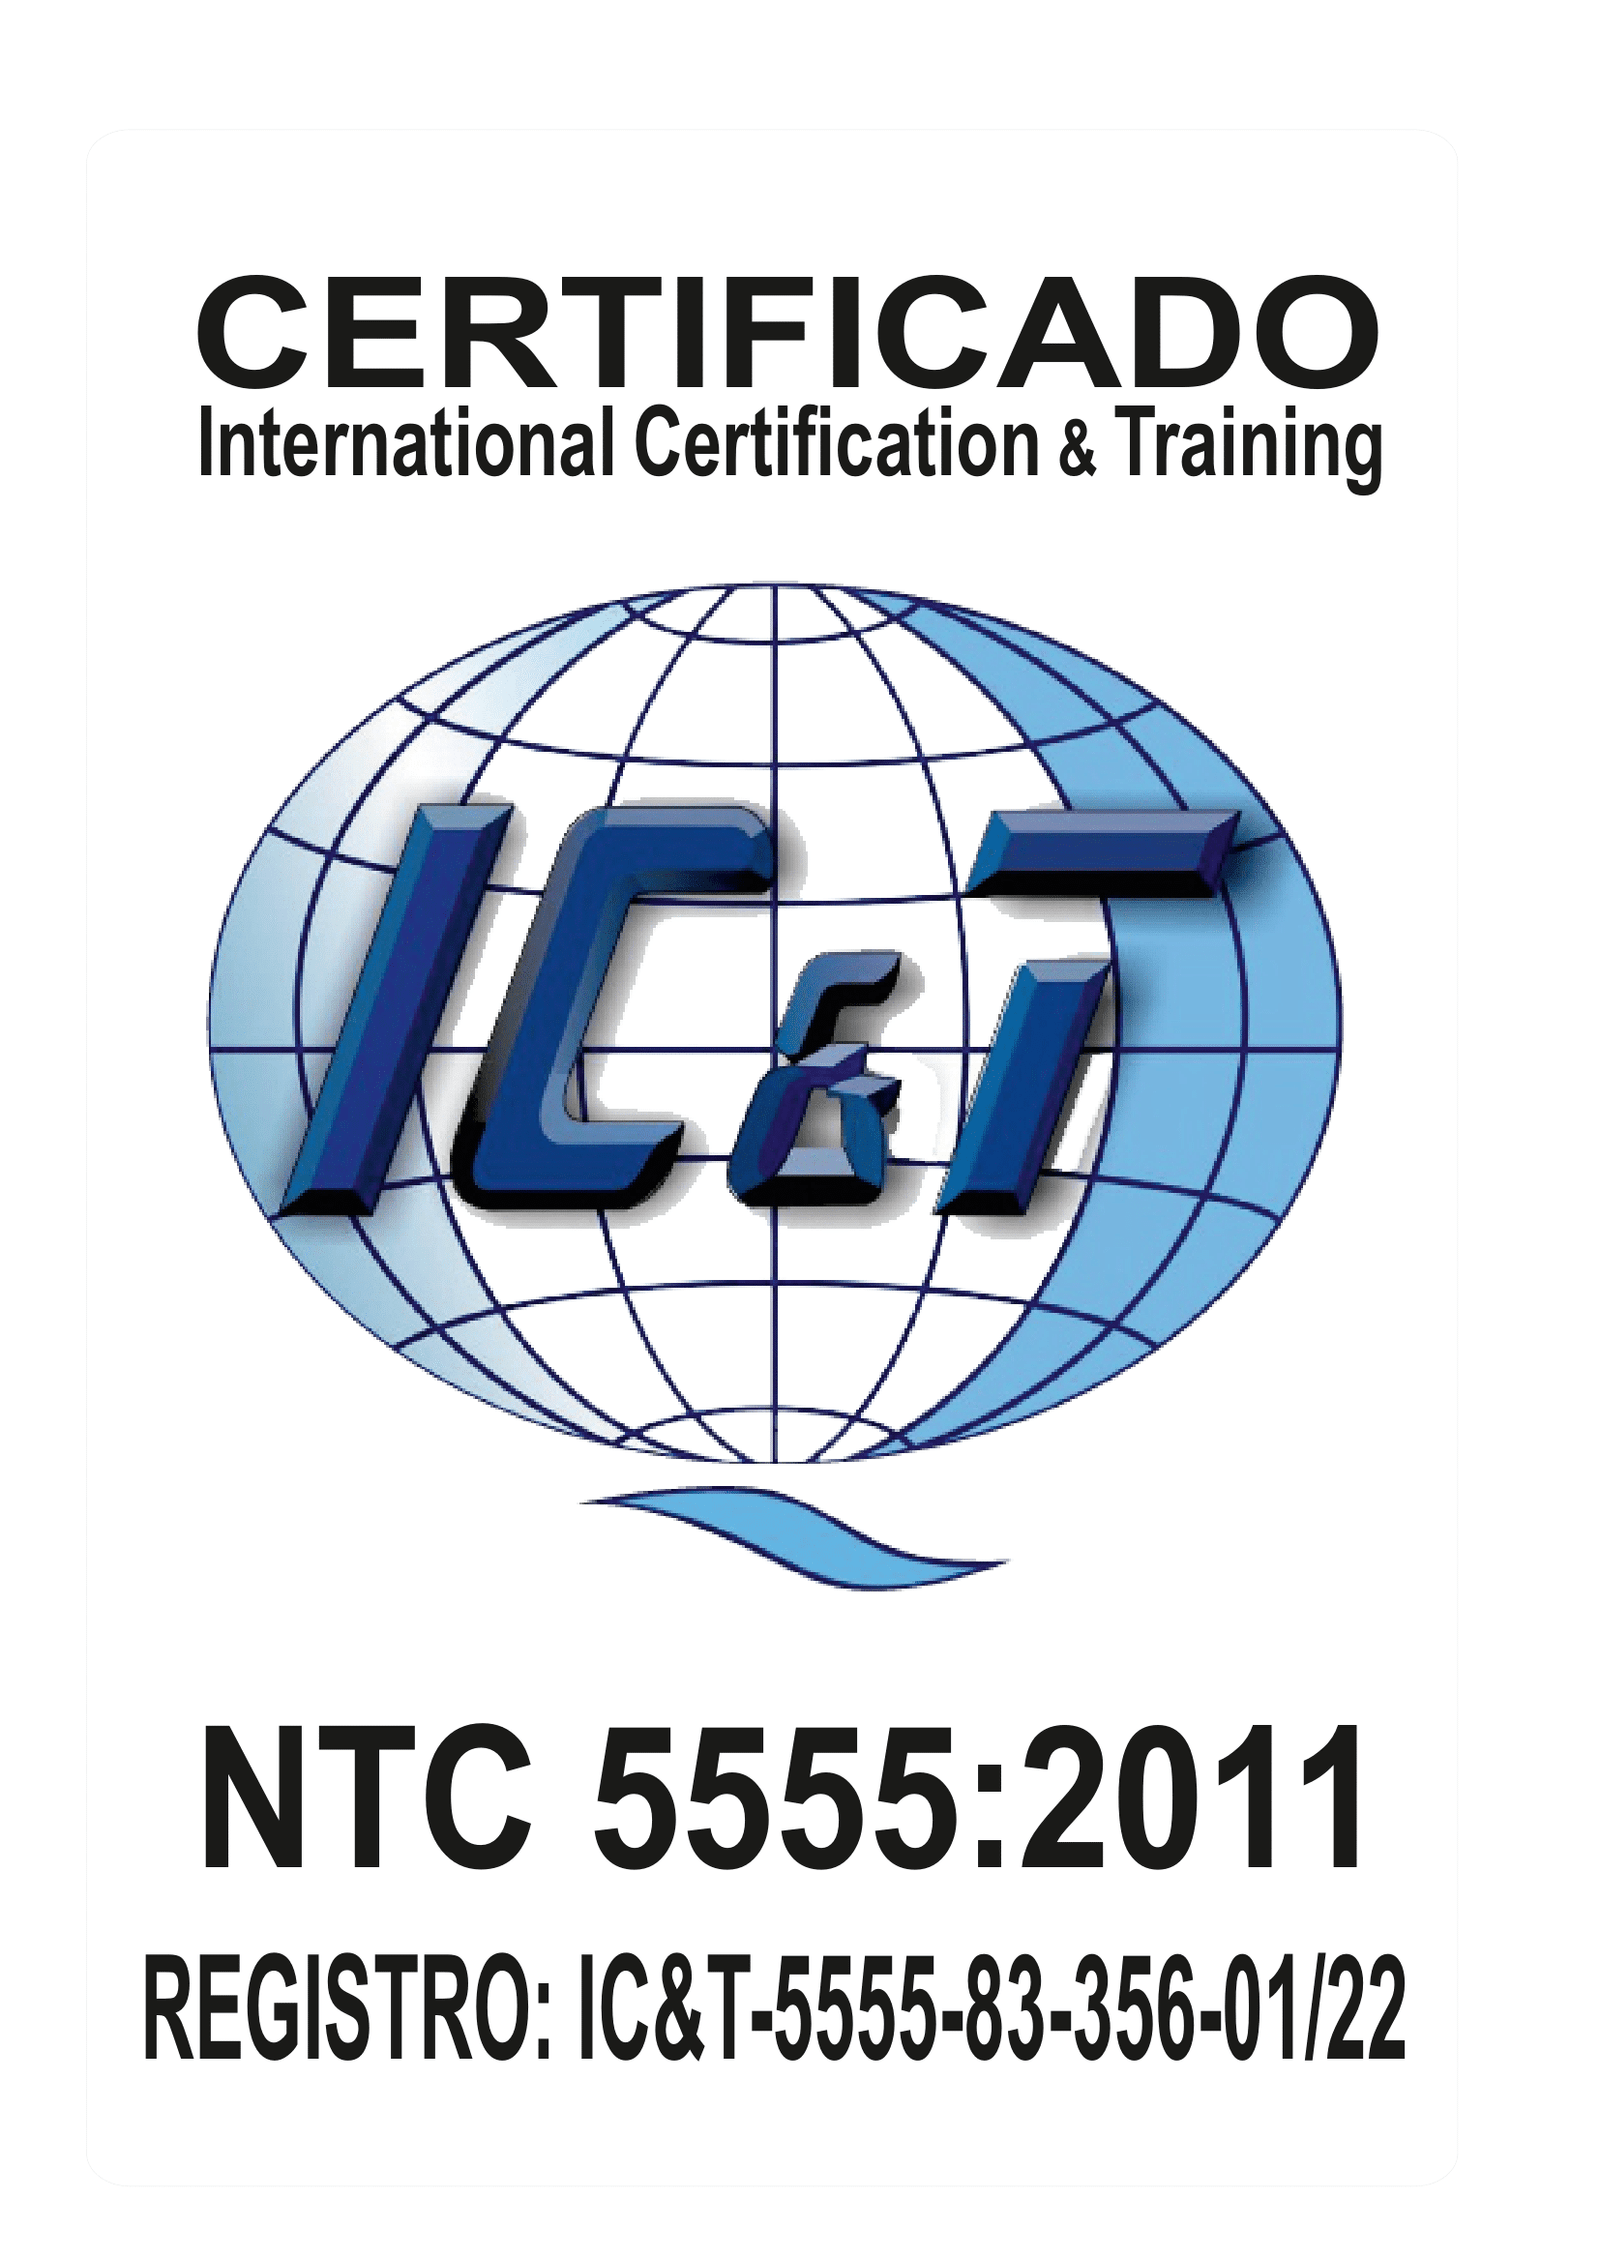 logo de certificado international certification & training NTC 5555:2011 registro: IC&T-5555-83-356-01/22